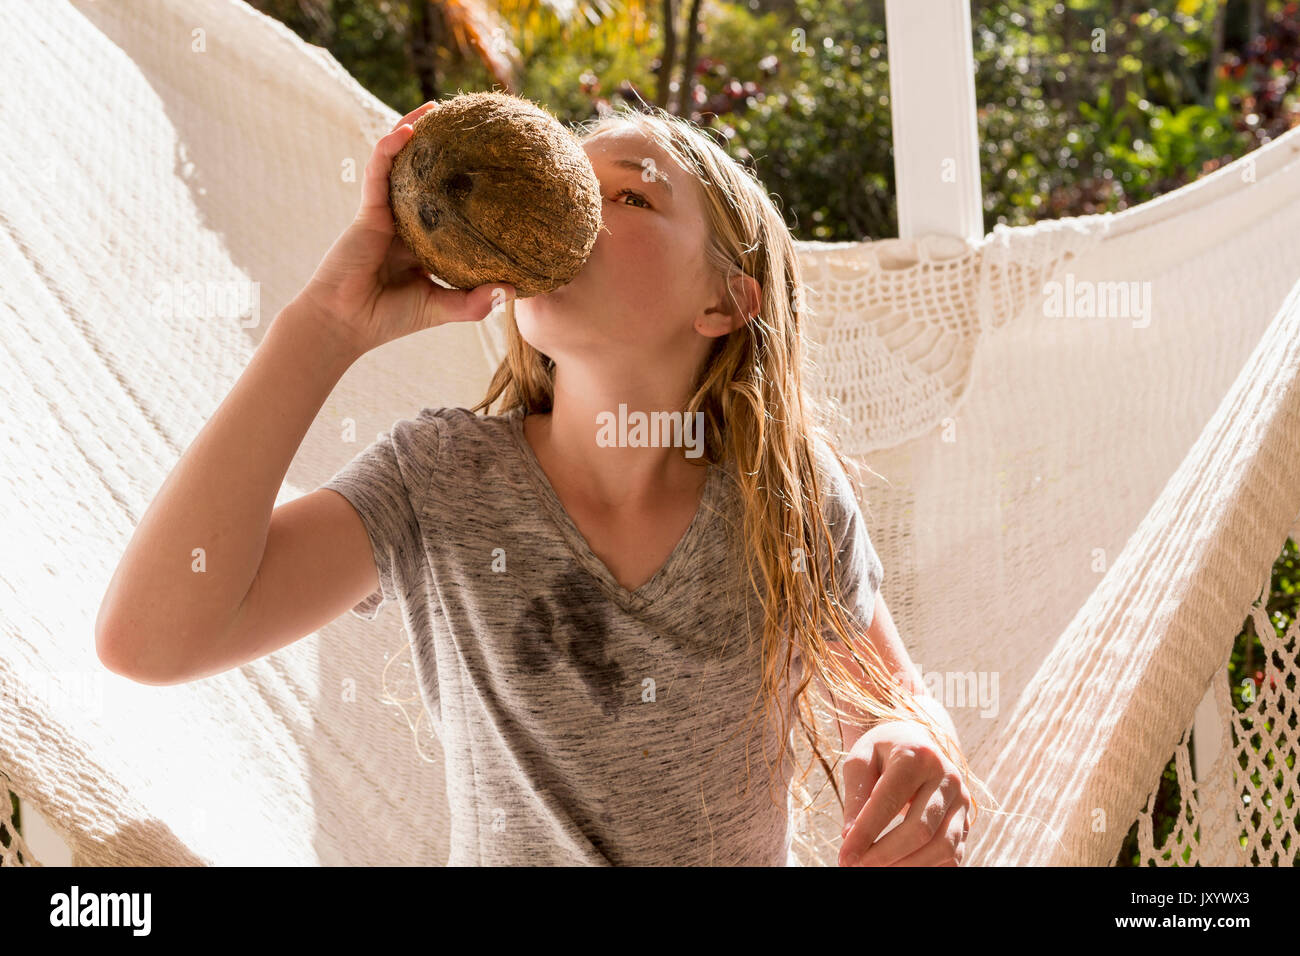 Caucasian girl sitting in hammock drinking from coconut Stock Photo